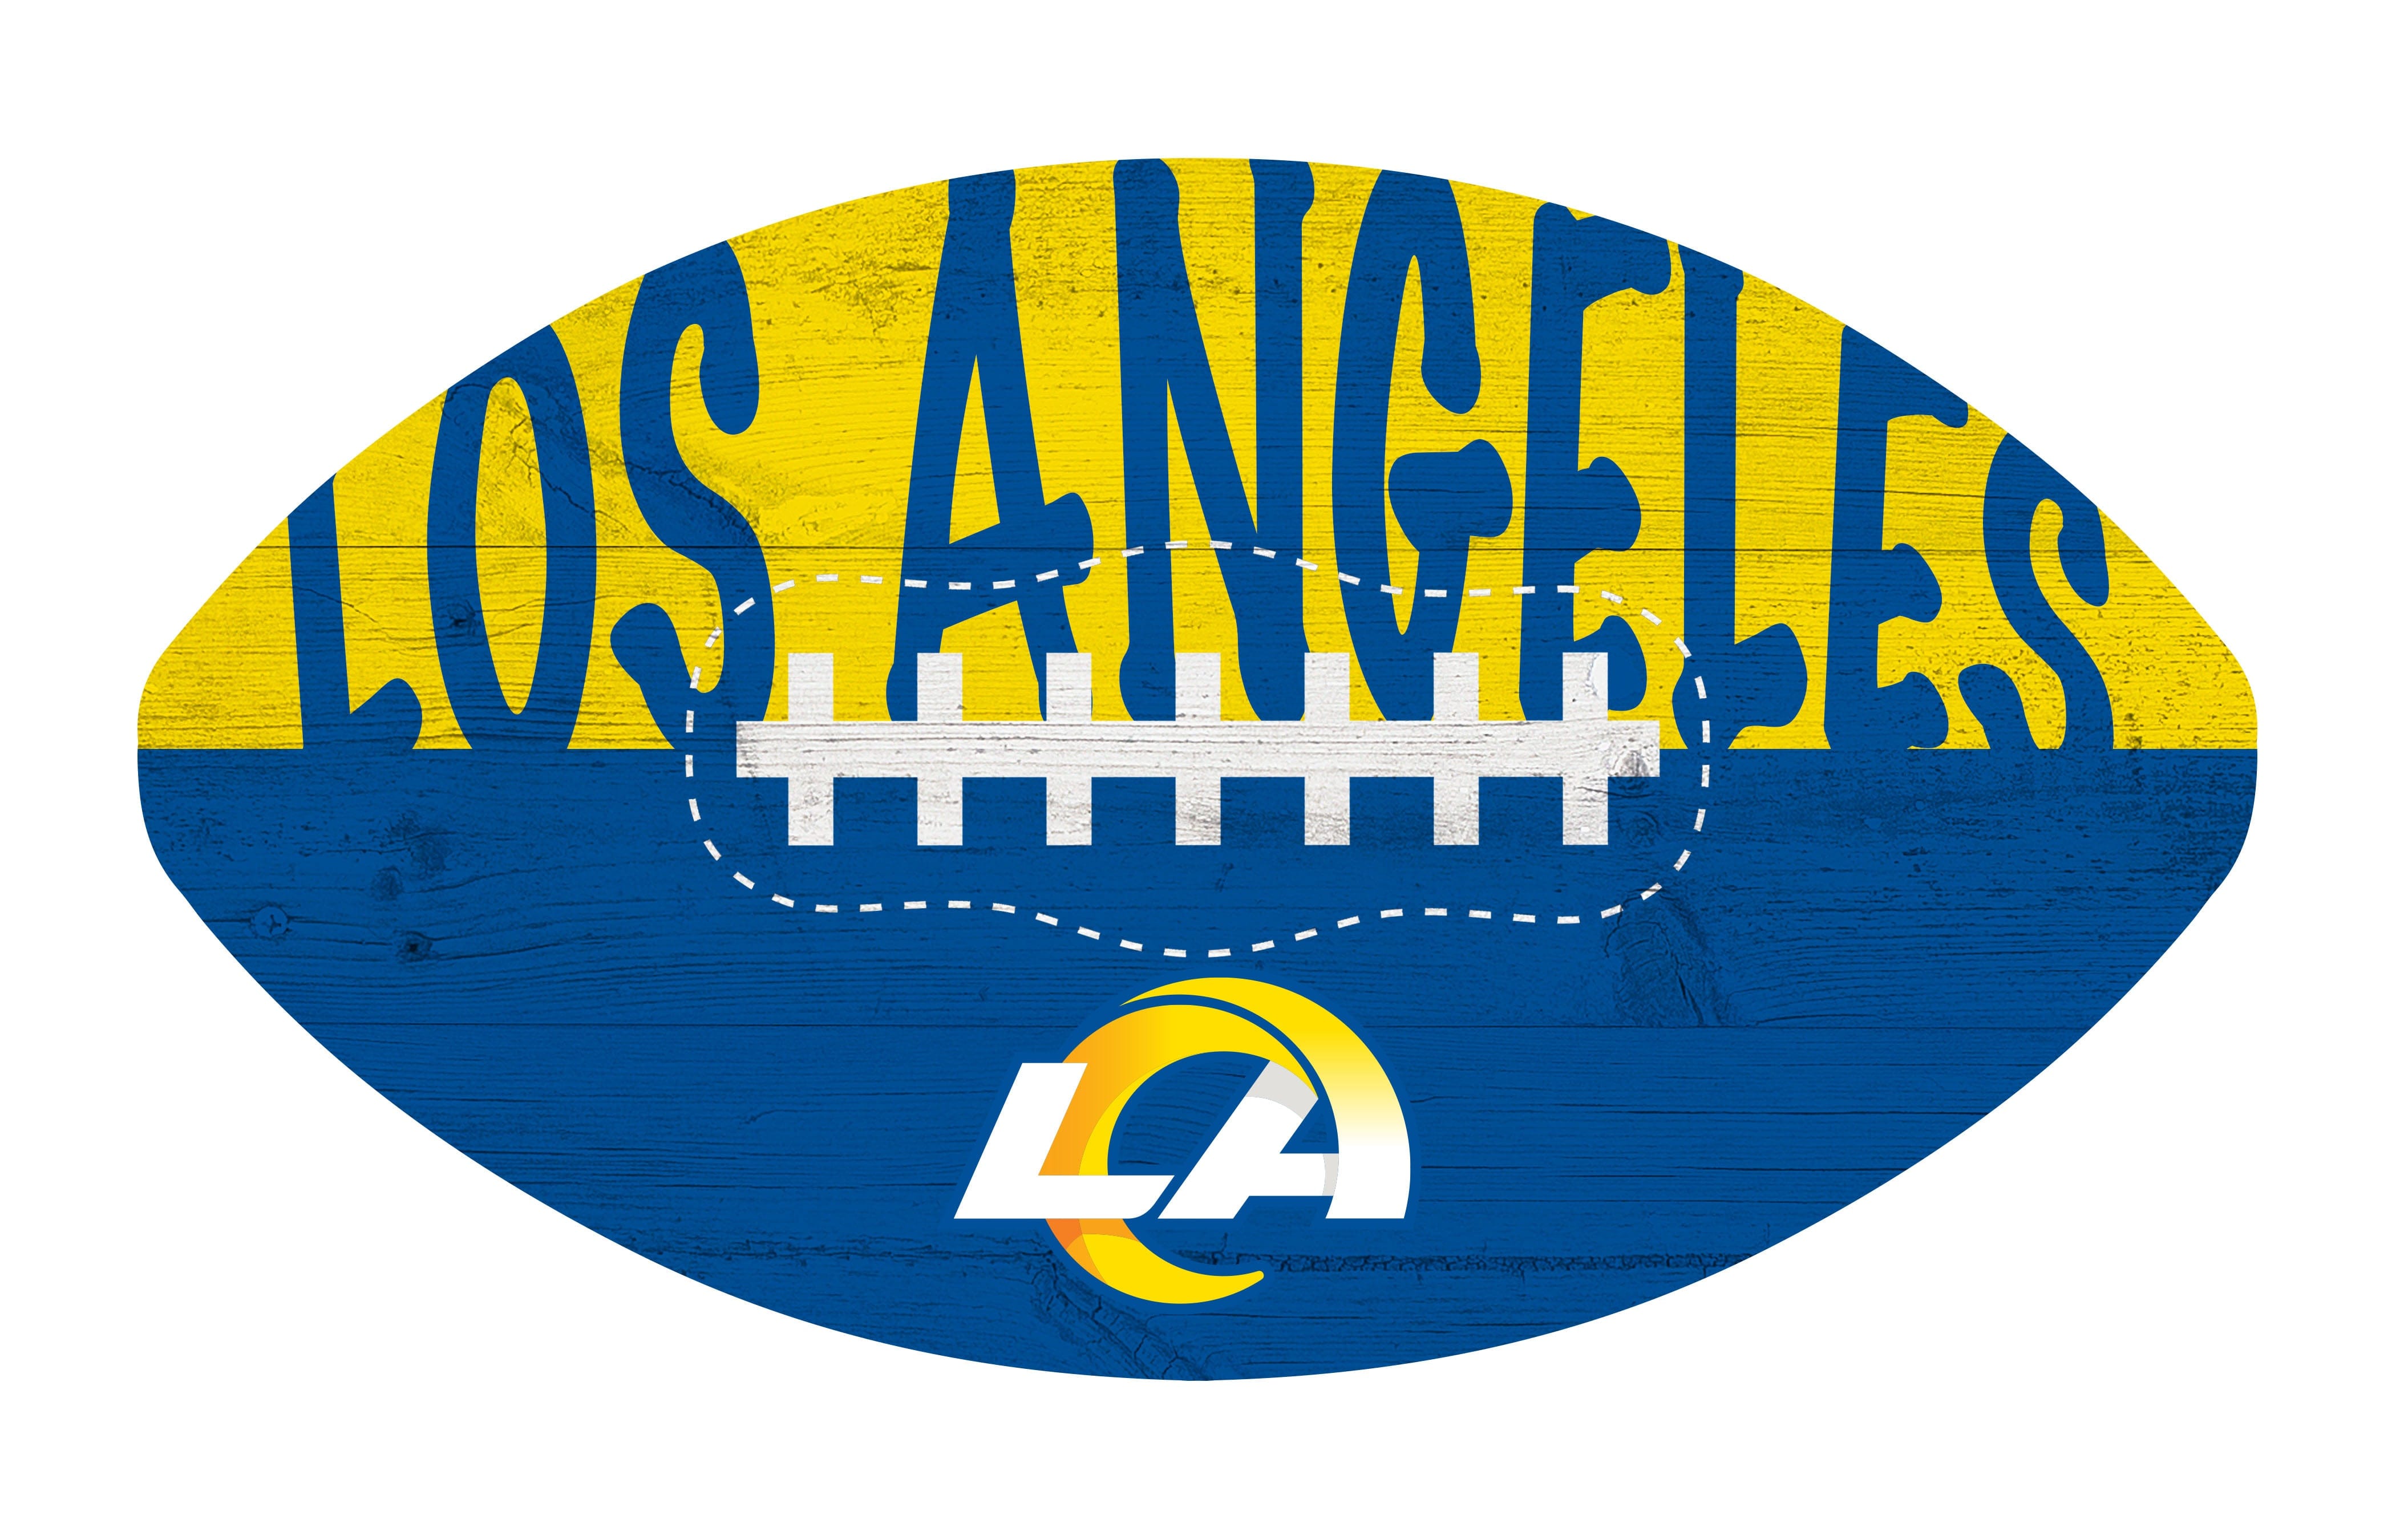 Los Angeles Dodgers Football Team Logo Custom Christmas Gift All